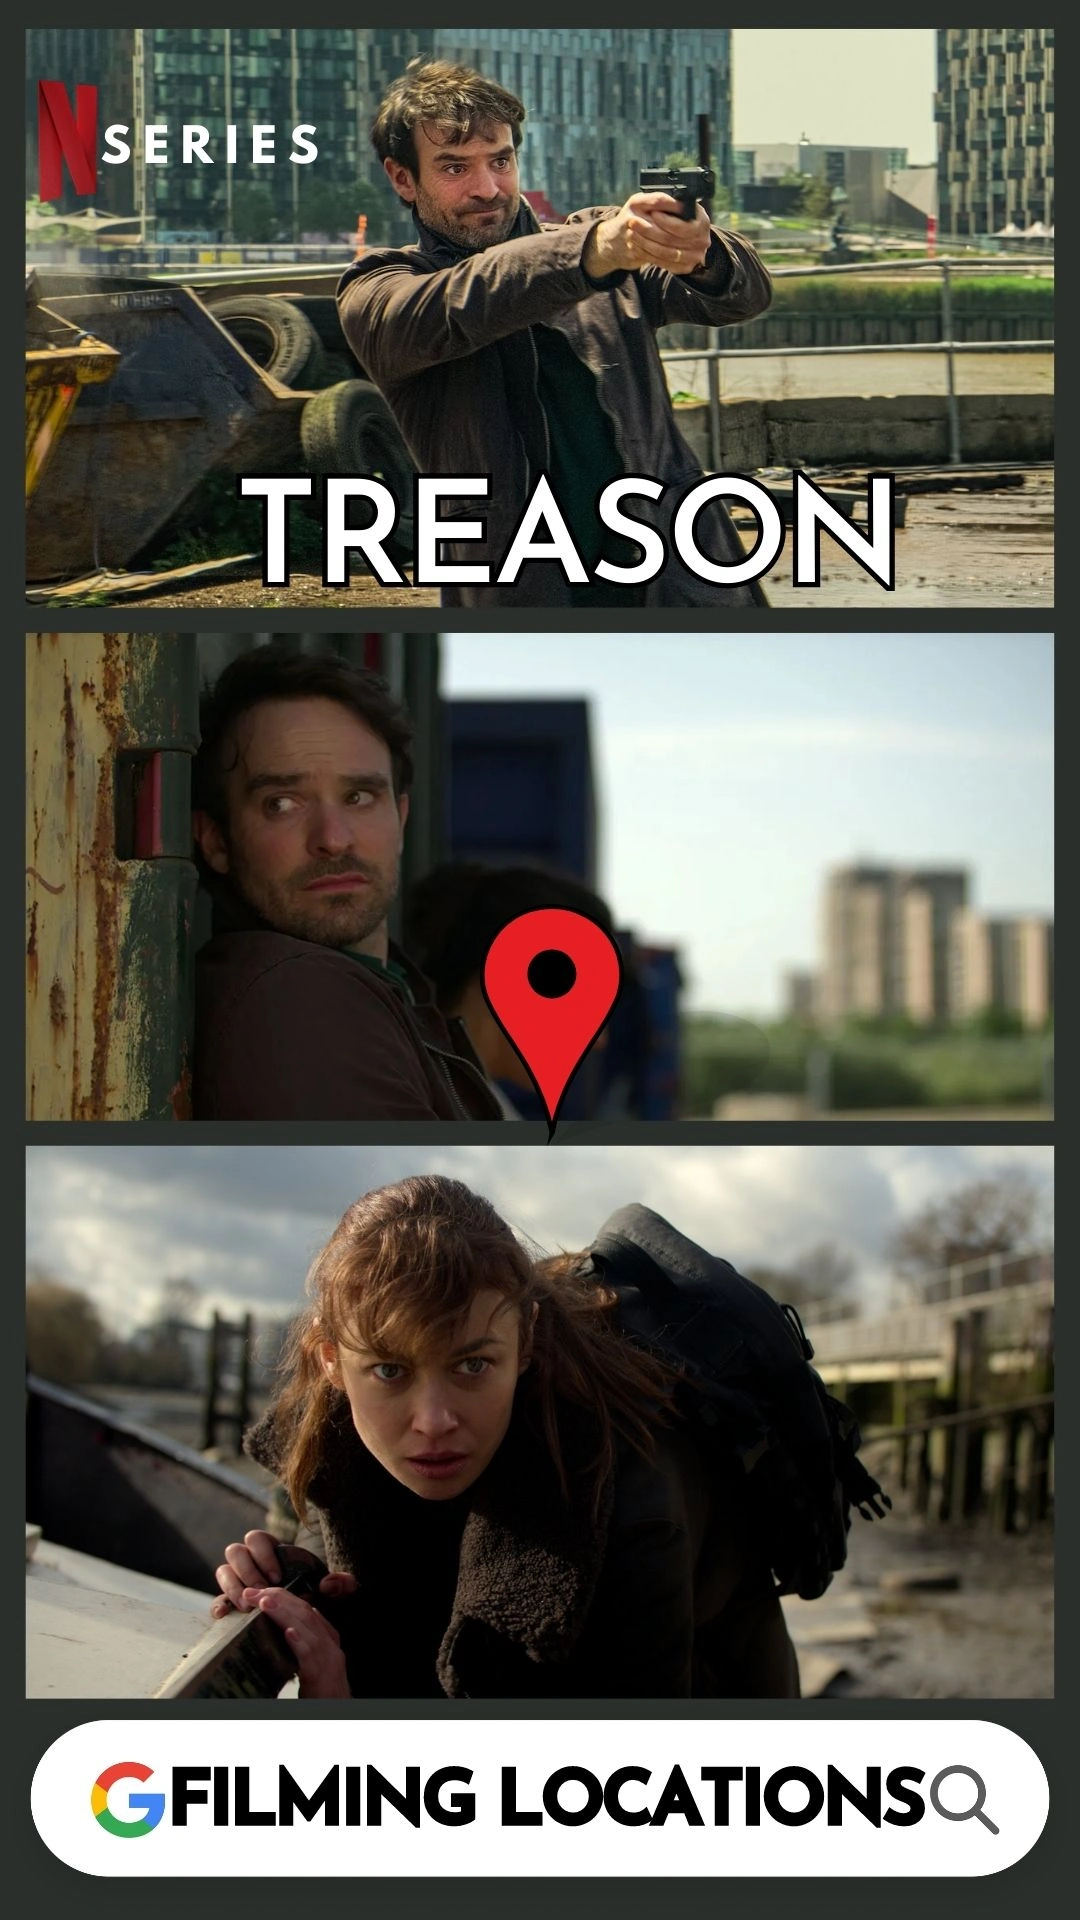 Treason Filming Locations